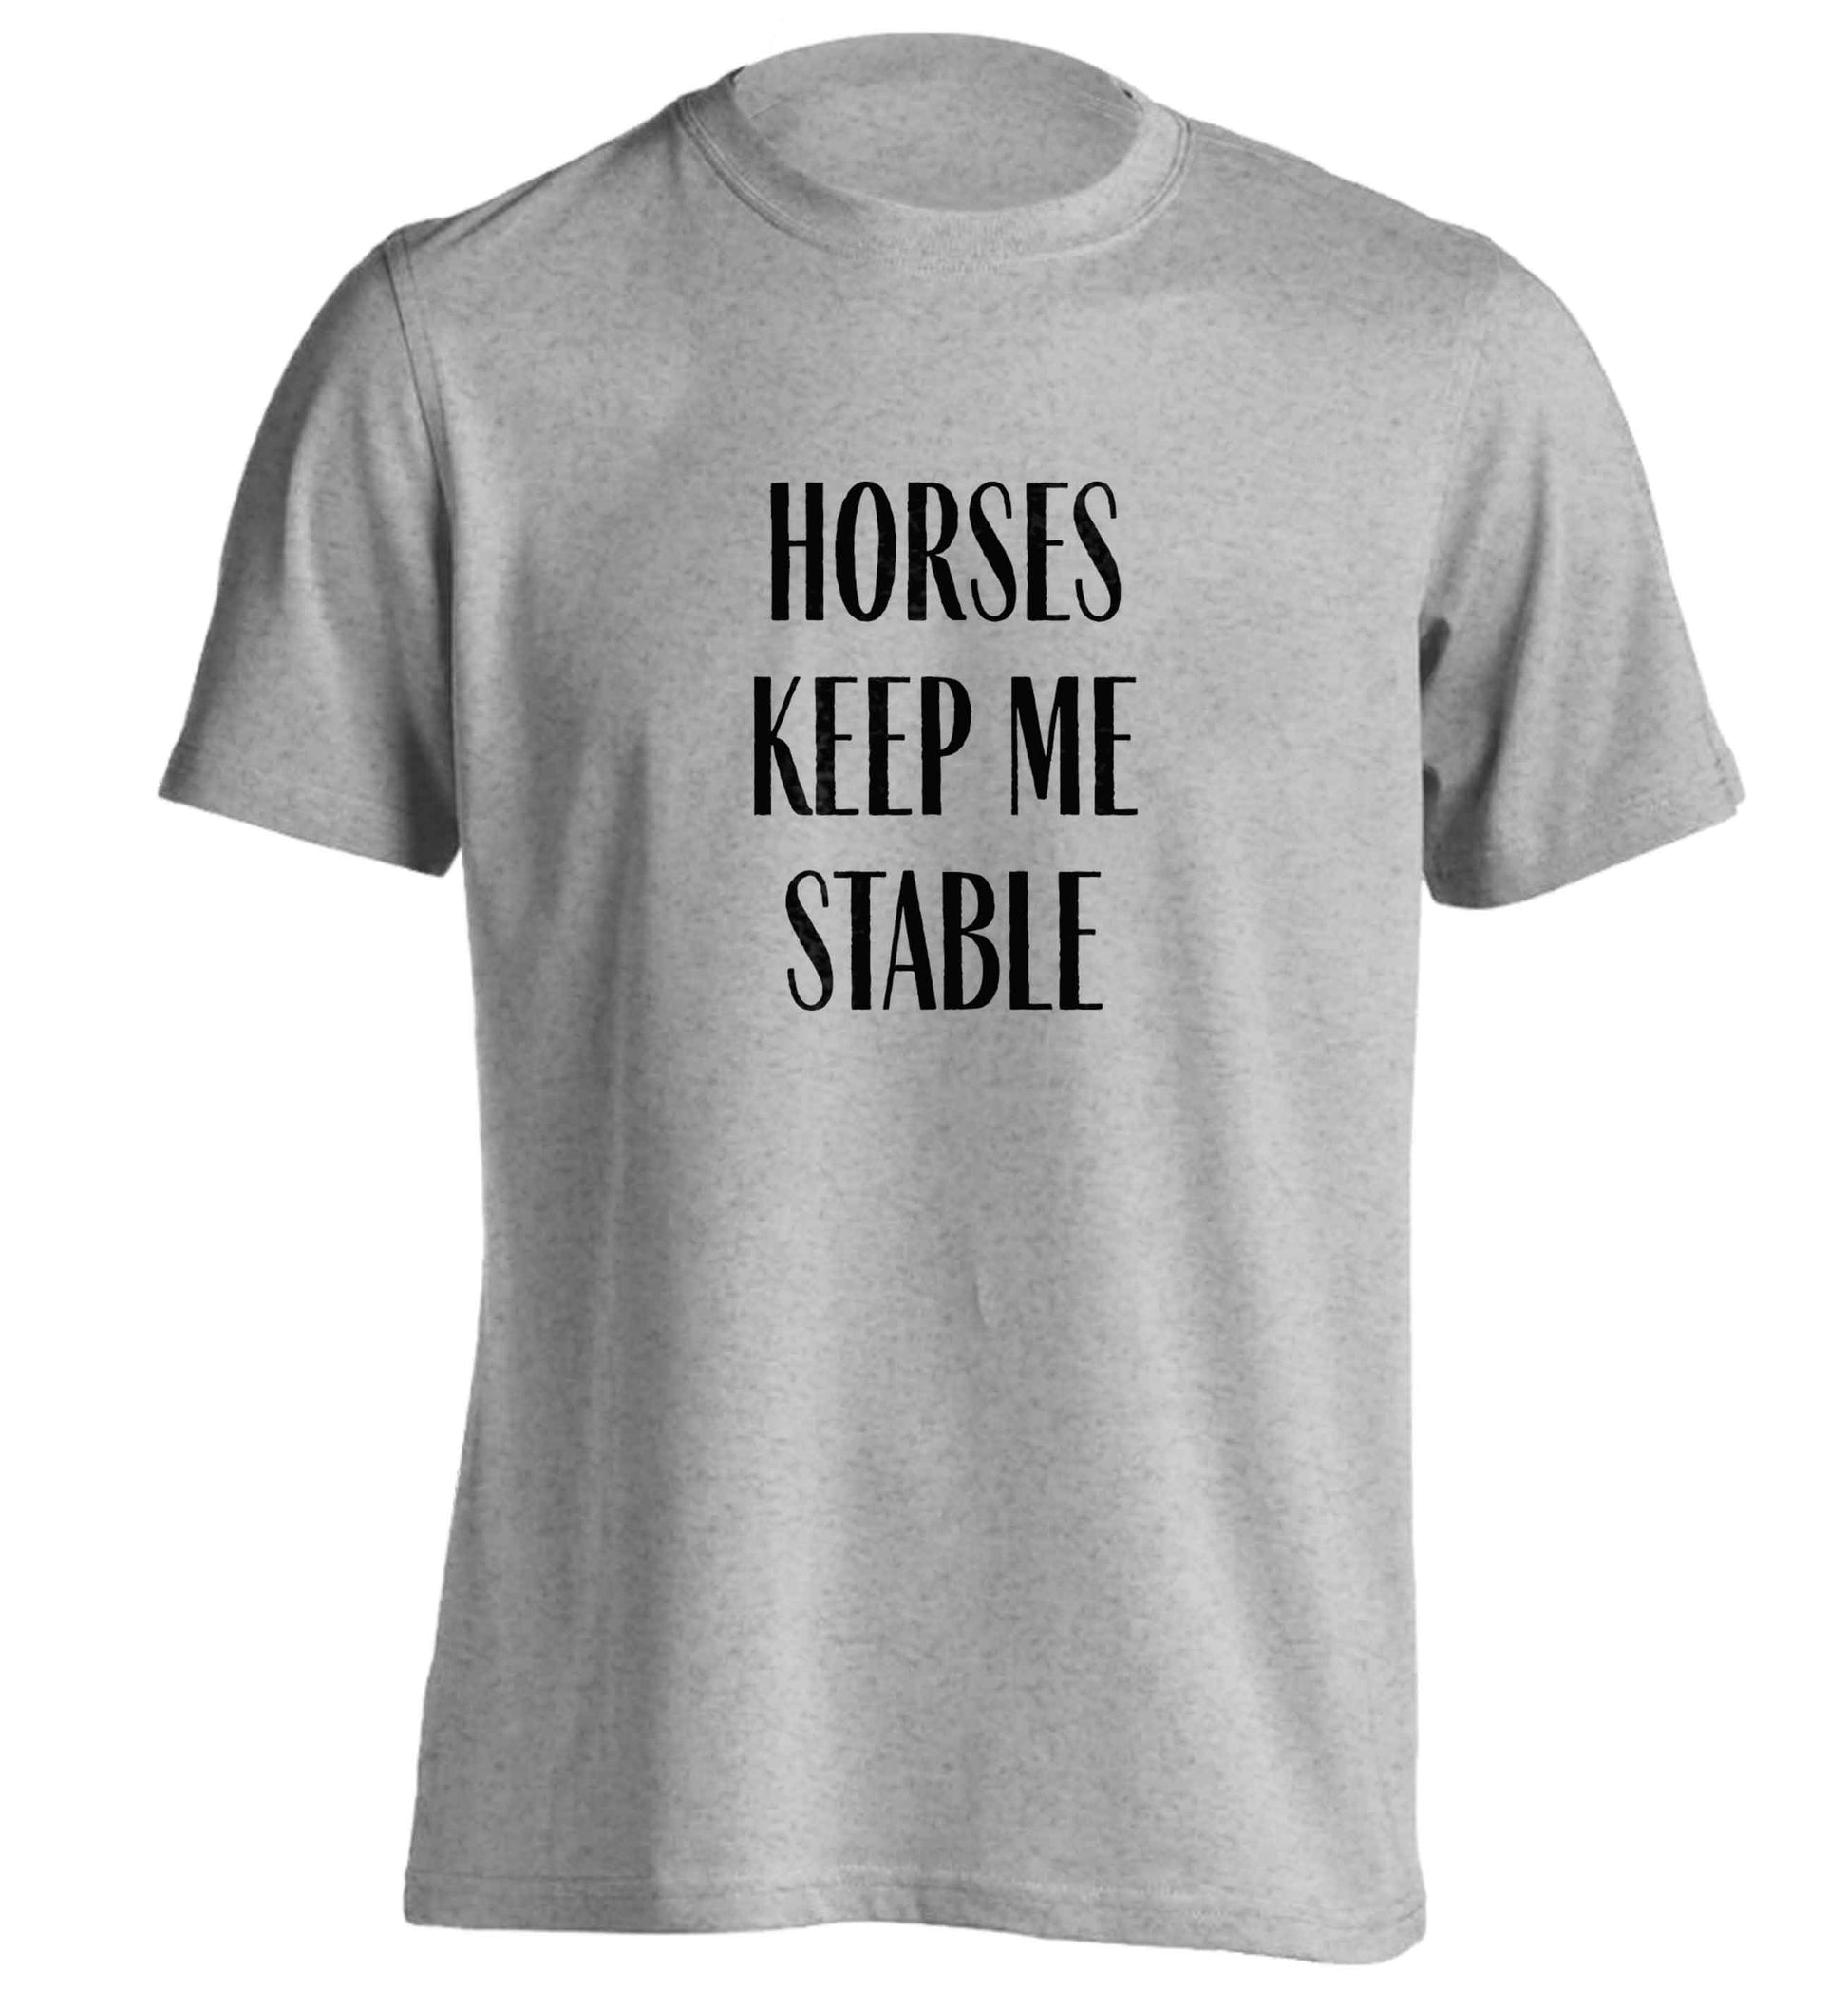 Horses keep me stable adults unisex grey Tshirt 2XL